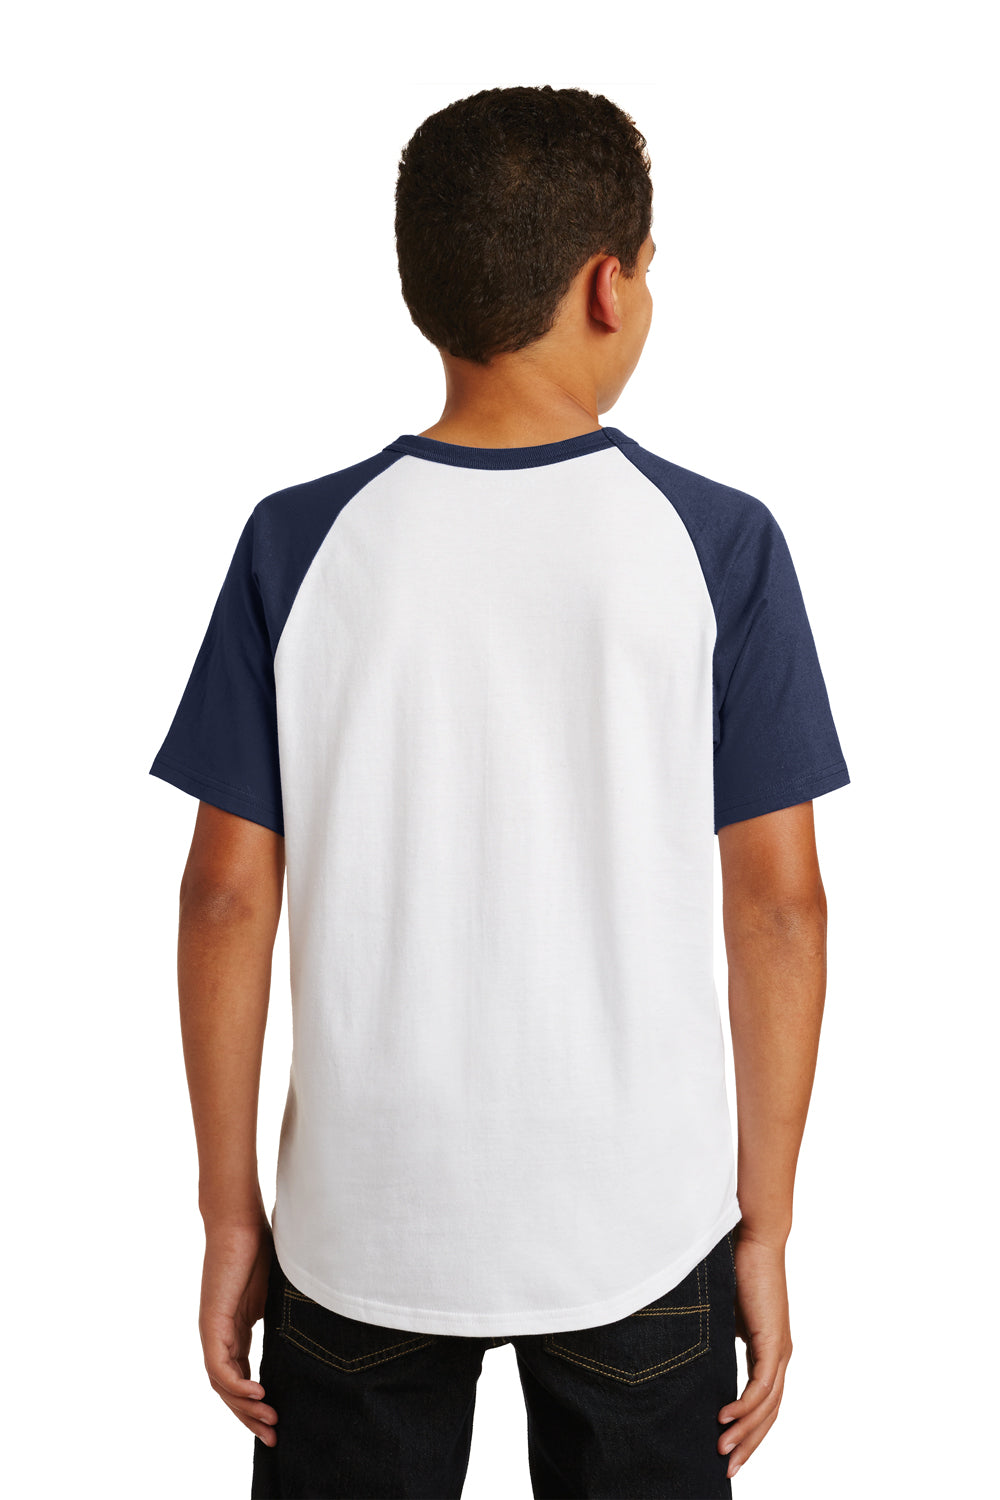 Sport-Tek YT201 Youth Short Sleeve Crewneck T-Shirt White/Navy Blue Back